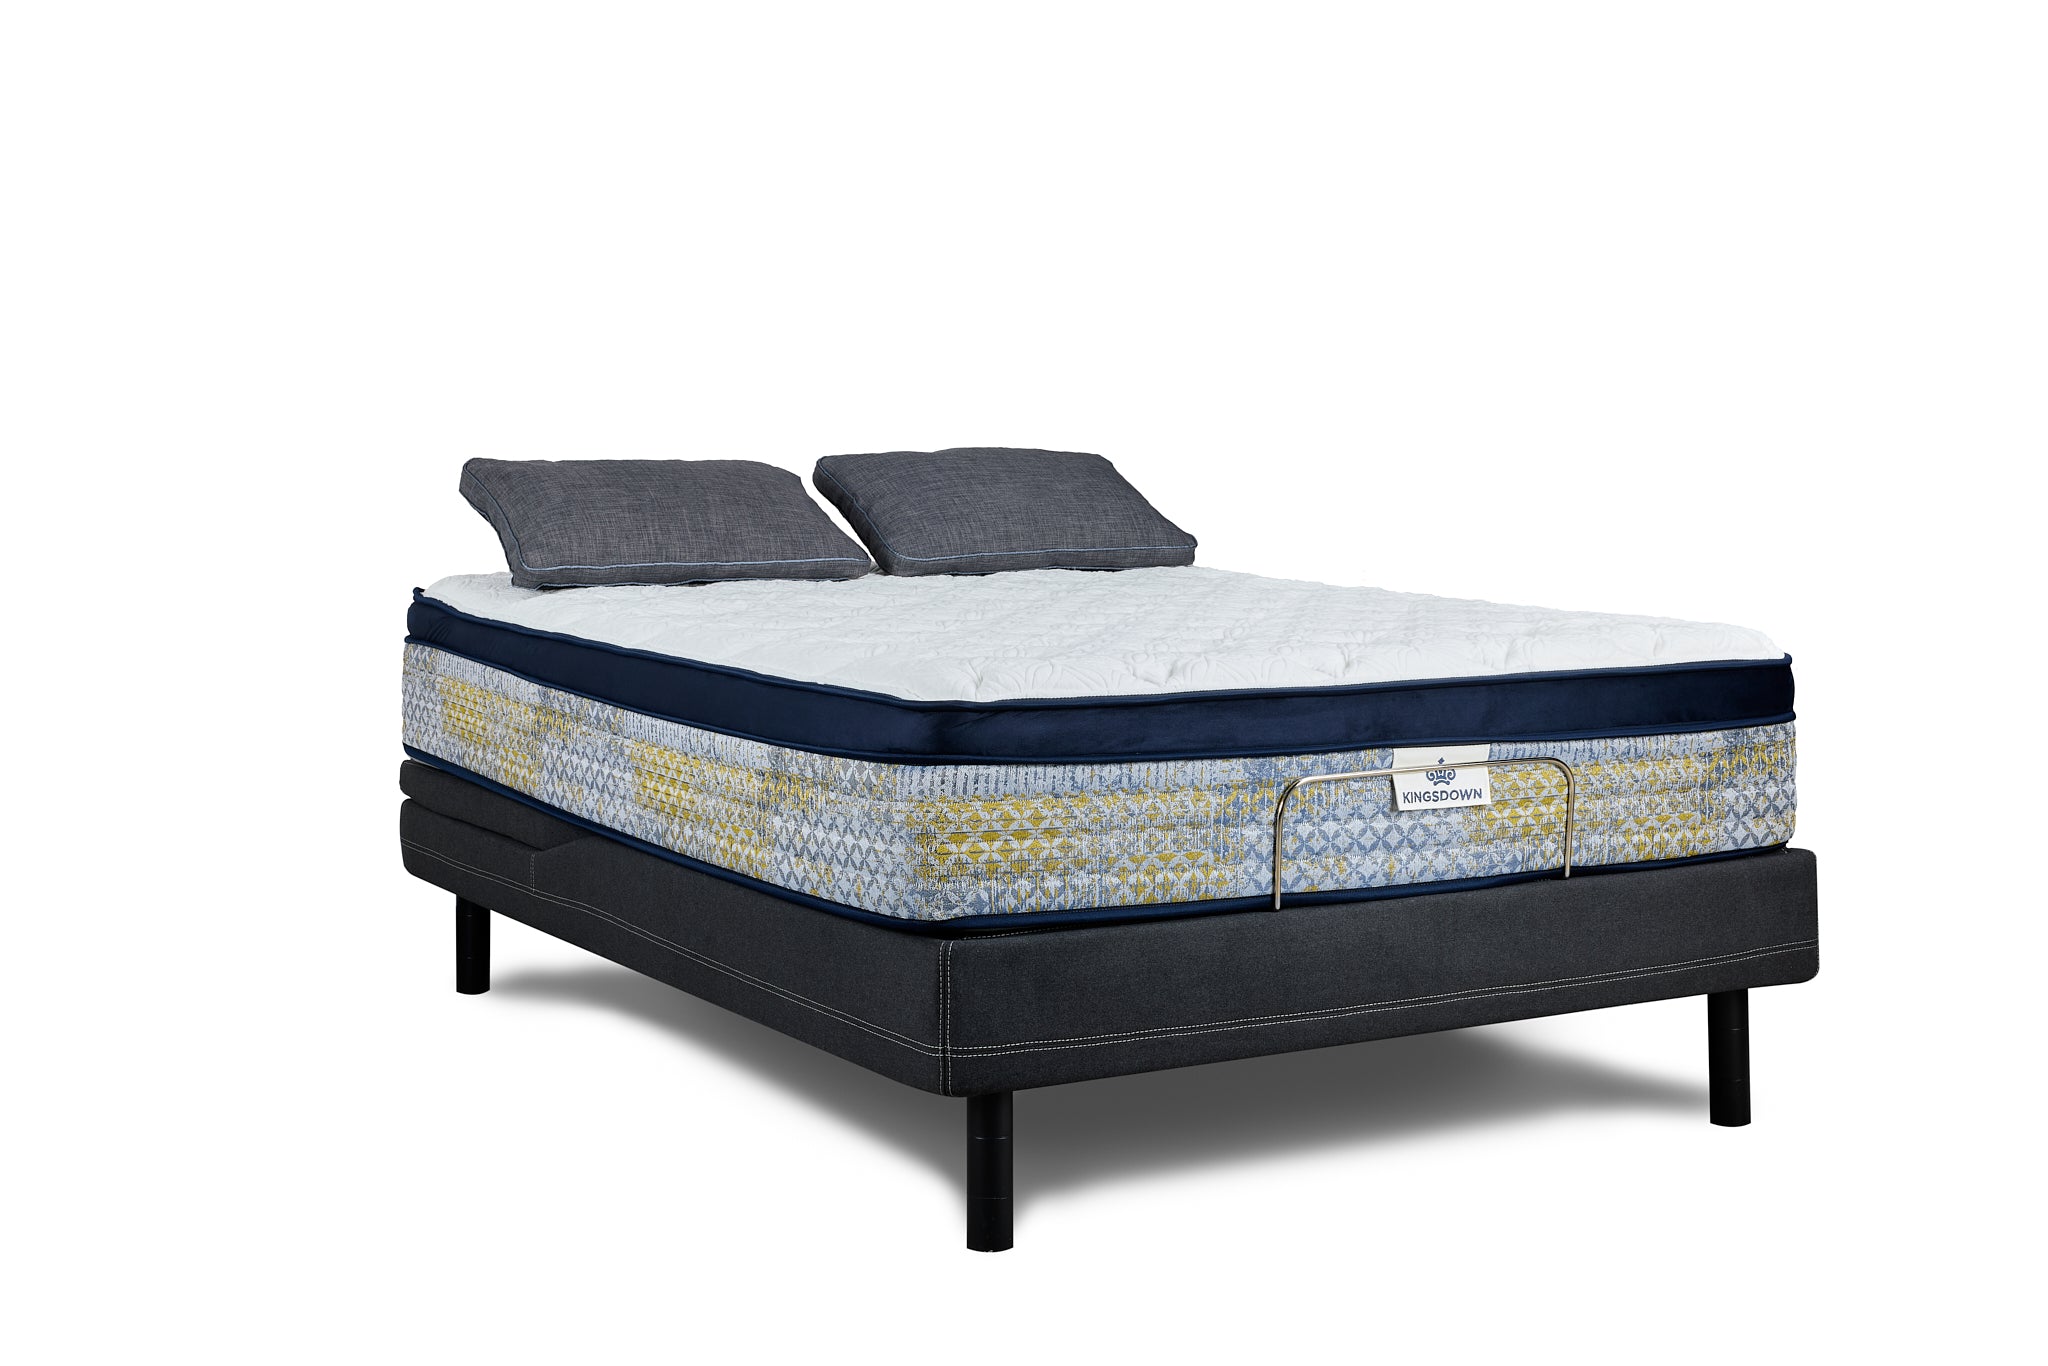 Serenity Series Queen Adjustable Bed Package